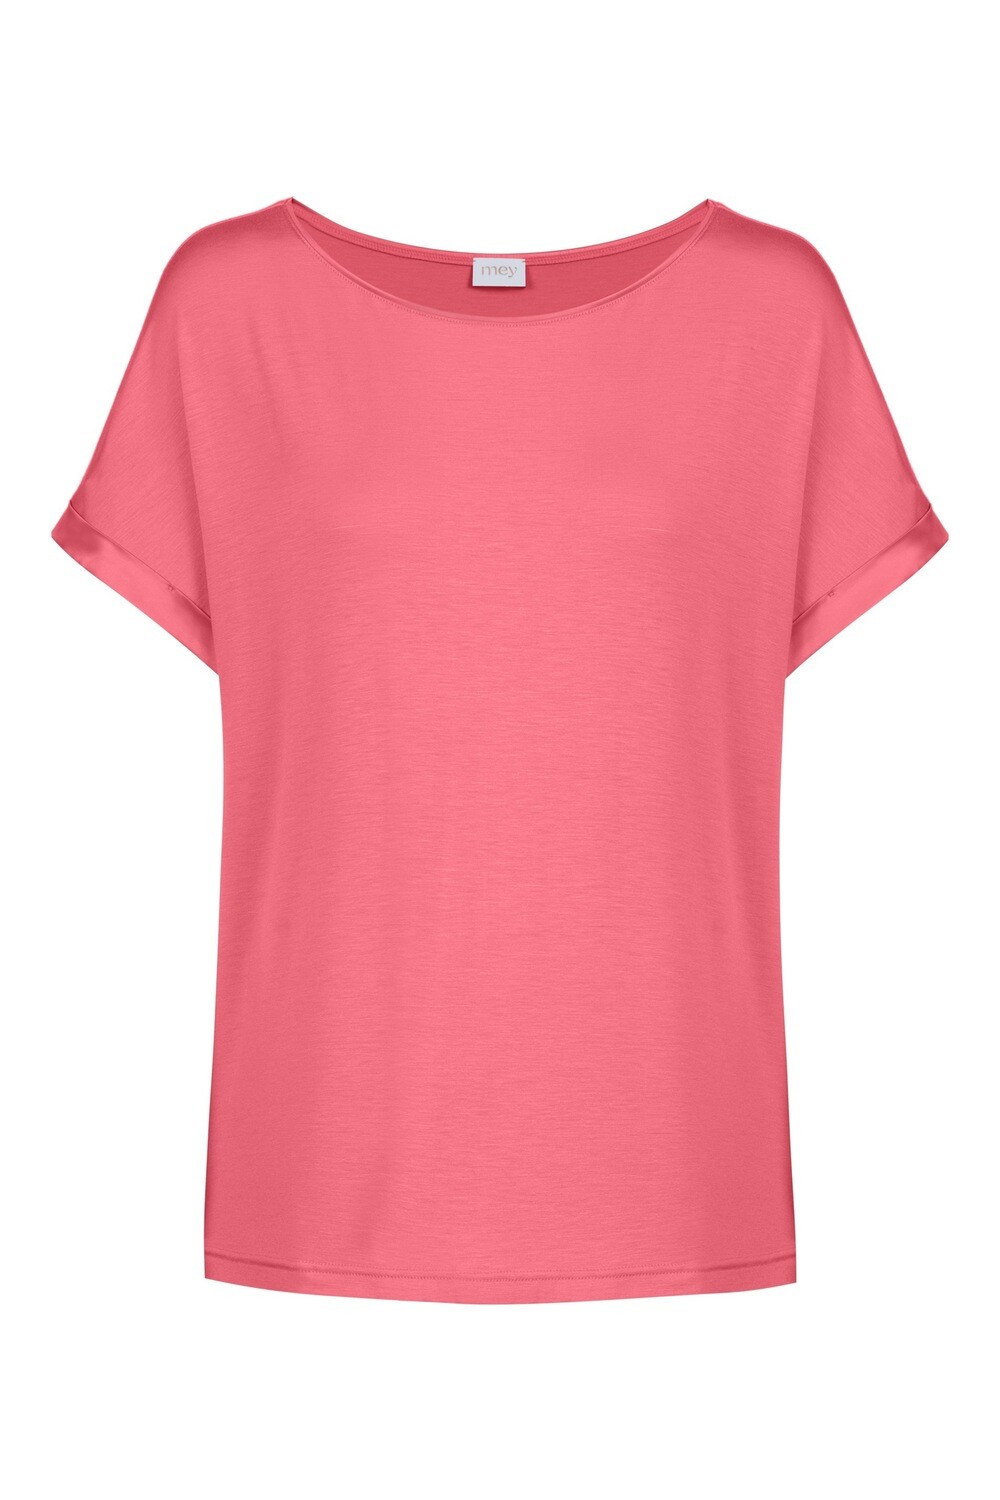 Mey Dames Alena T-shirt Korte Mouw Parrot Pink 16407